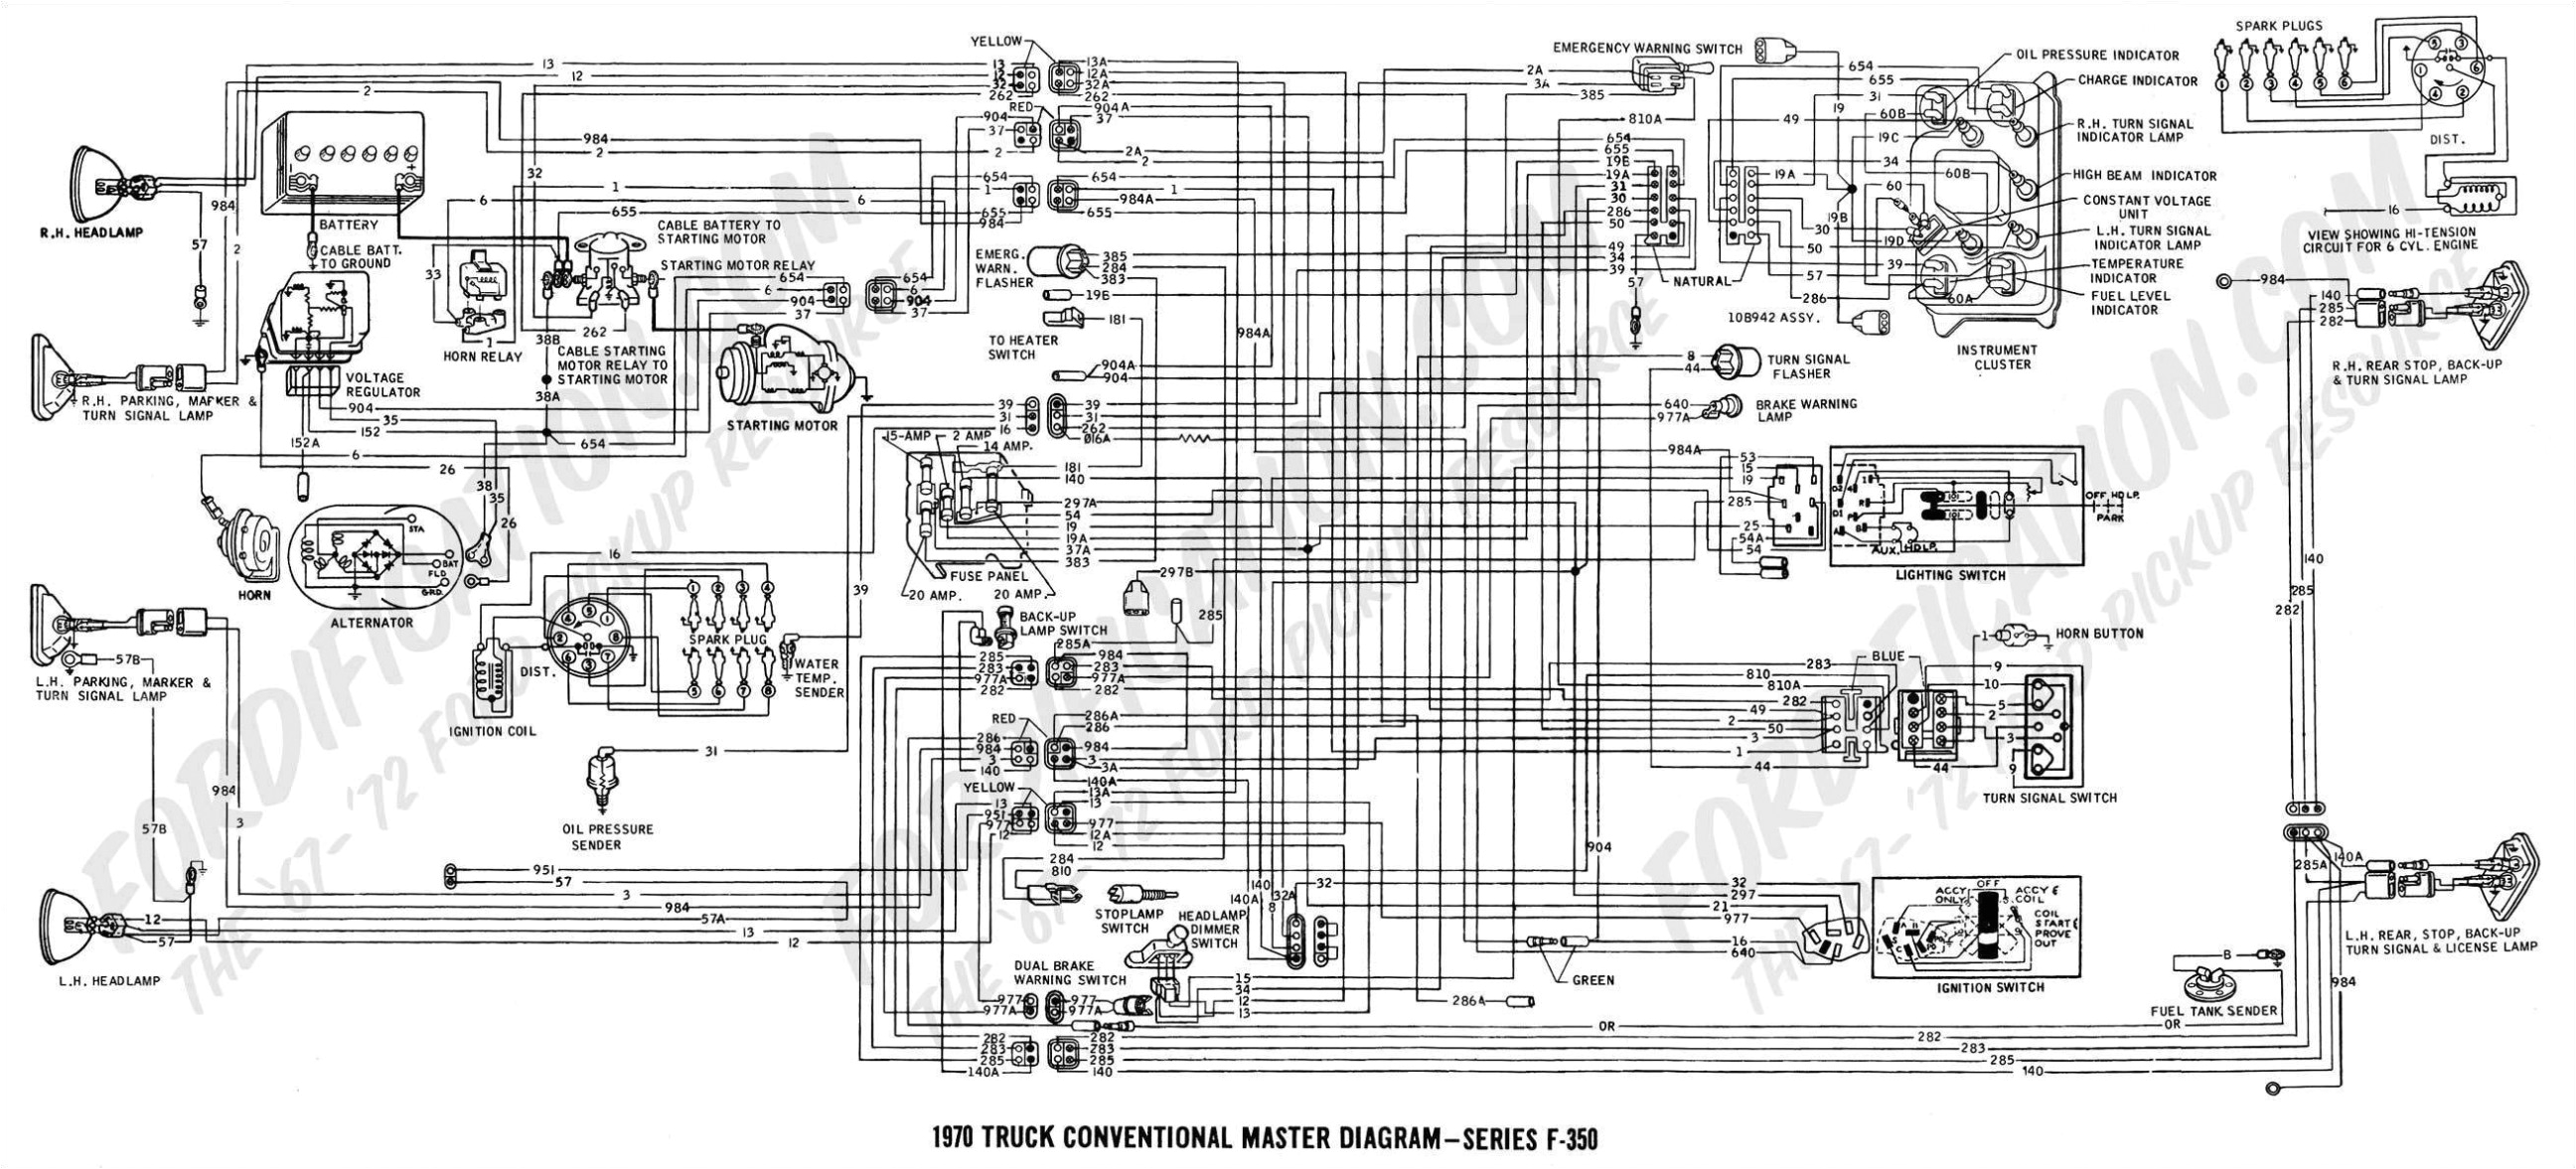 2003 f250 7 3 wiring harness wiring diagram sheet 2003 f250 7 3 wiring harness 2003 f250 wiring harness